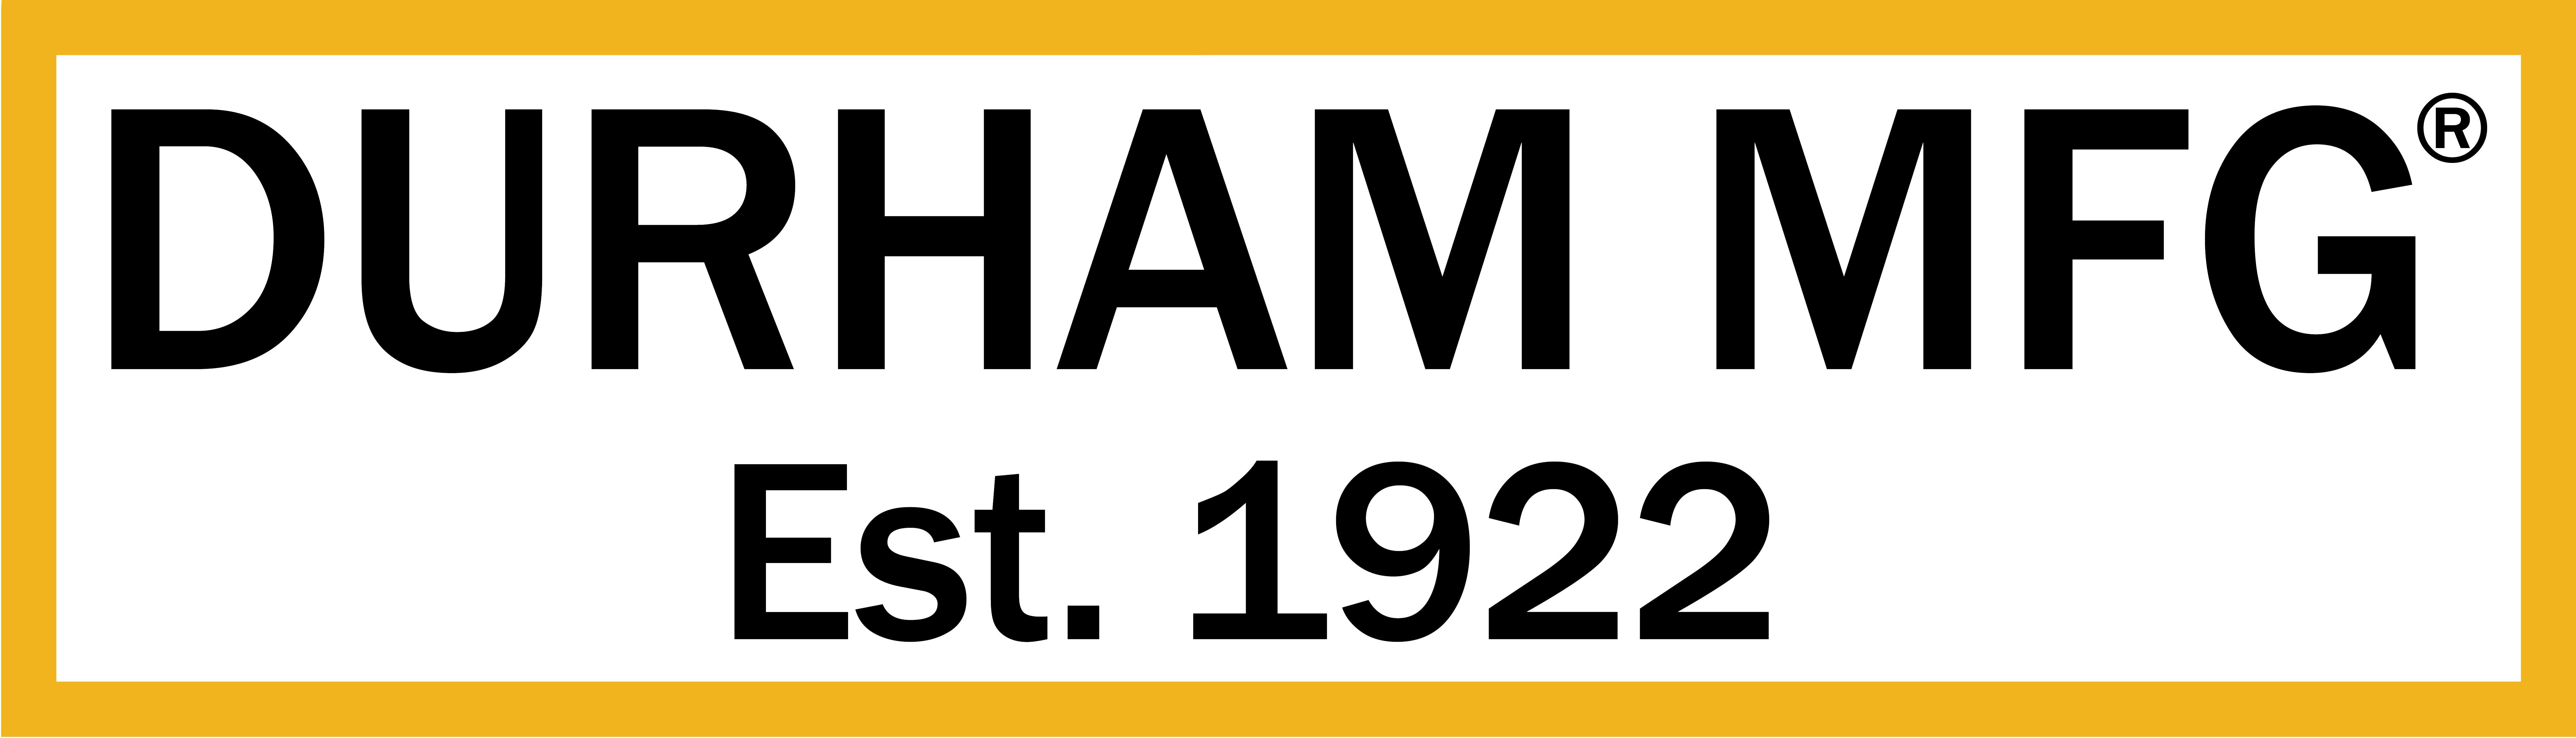 Durham Logo - Home